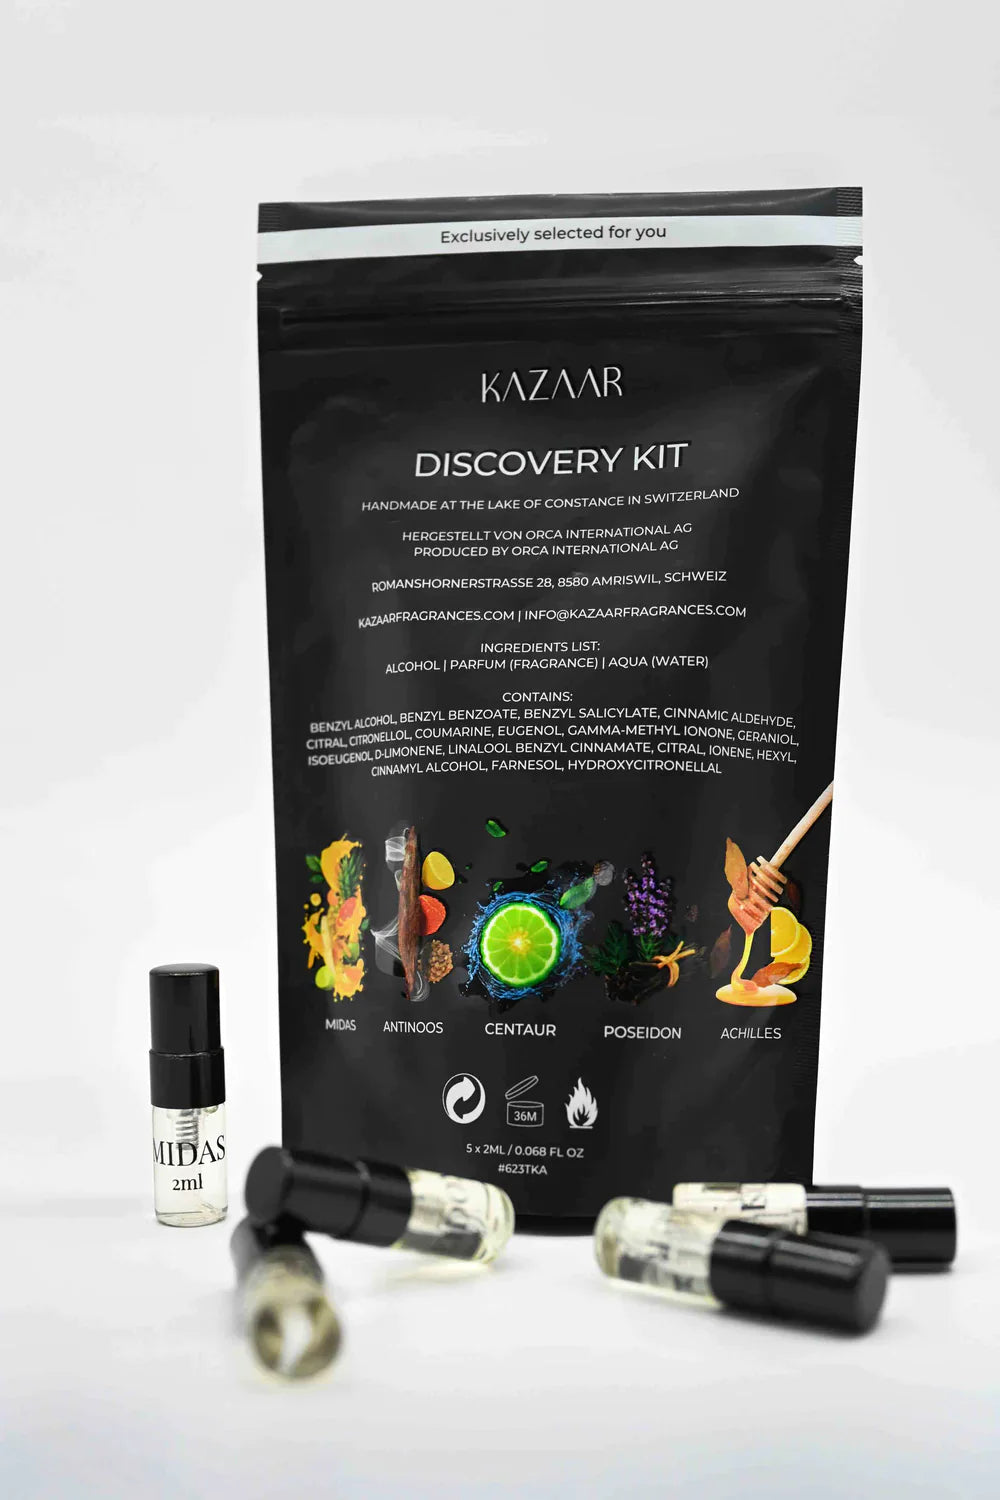 Discovery Kit Proben